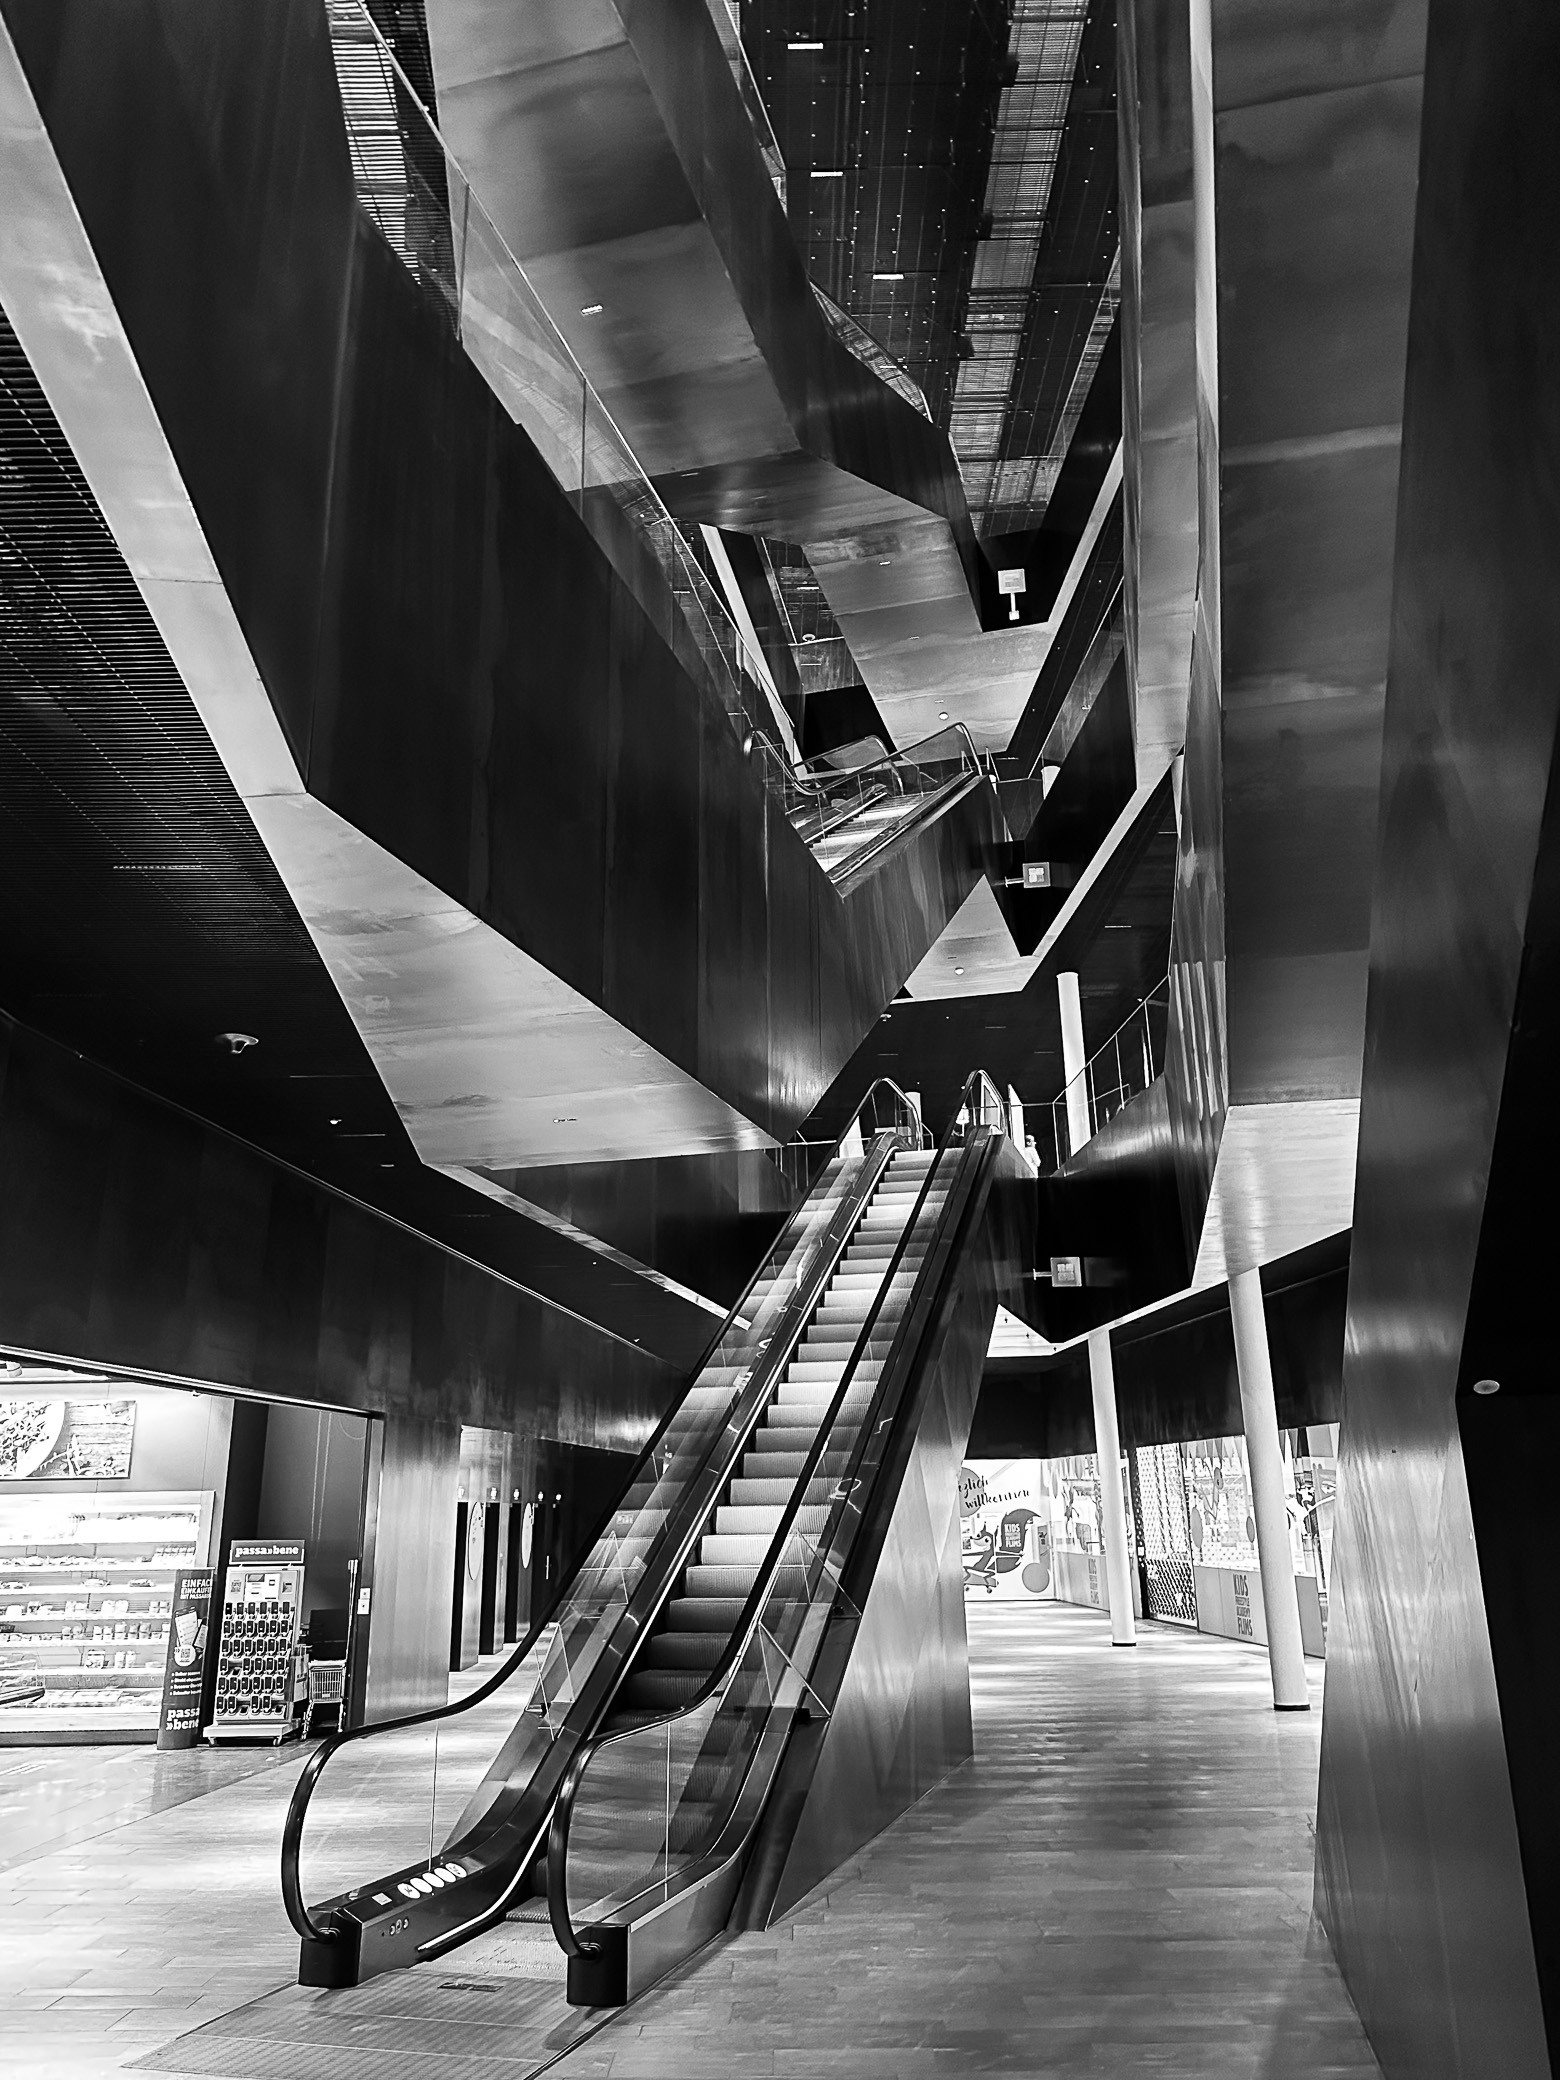 solation - empty escalators in a deserted high tech mall